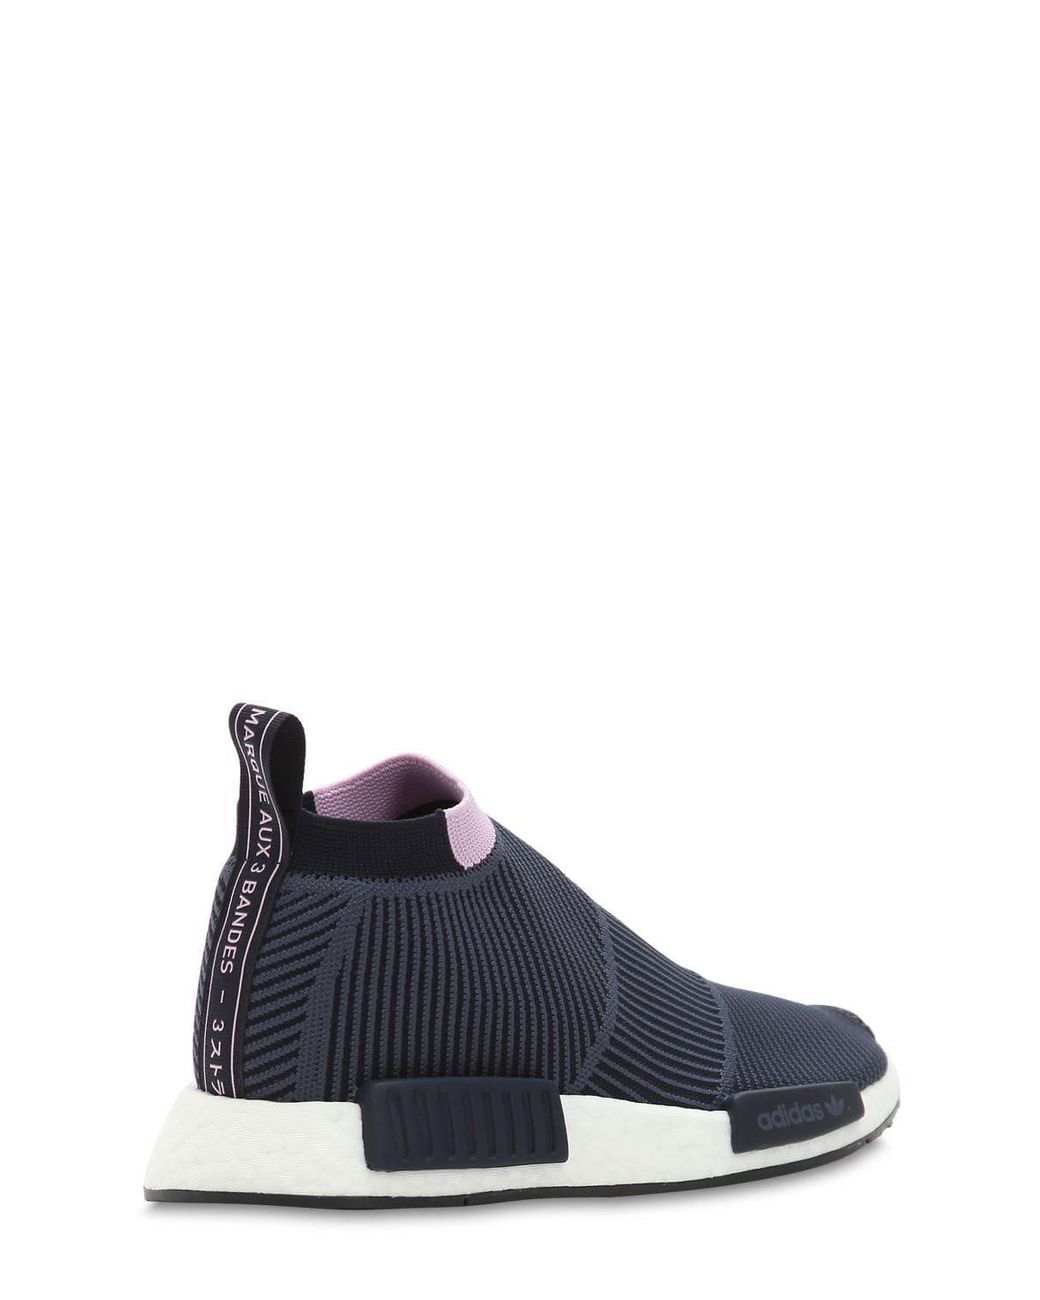 adidas Originals Nmd Cs1 Primeknit Sneakers in Grey (Gray) | Lyst